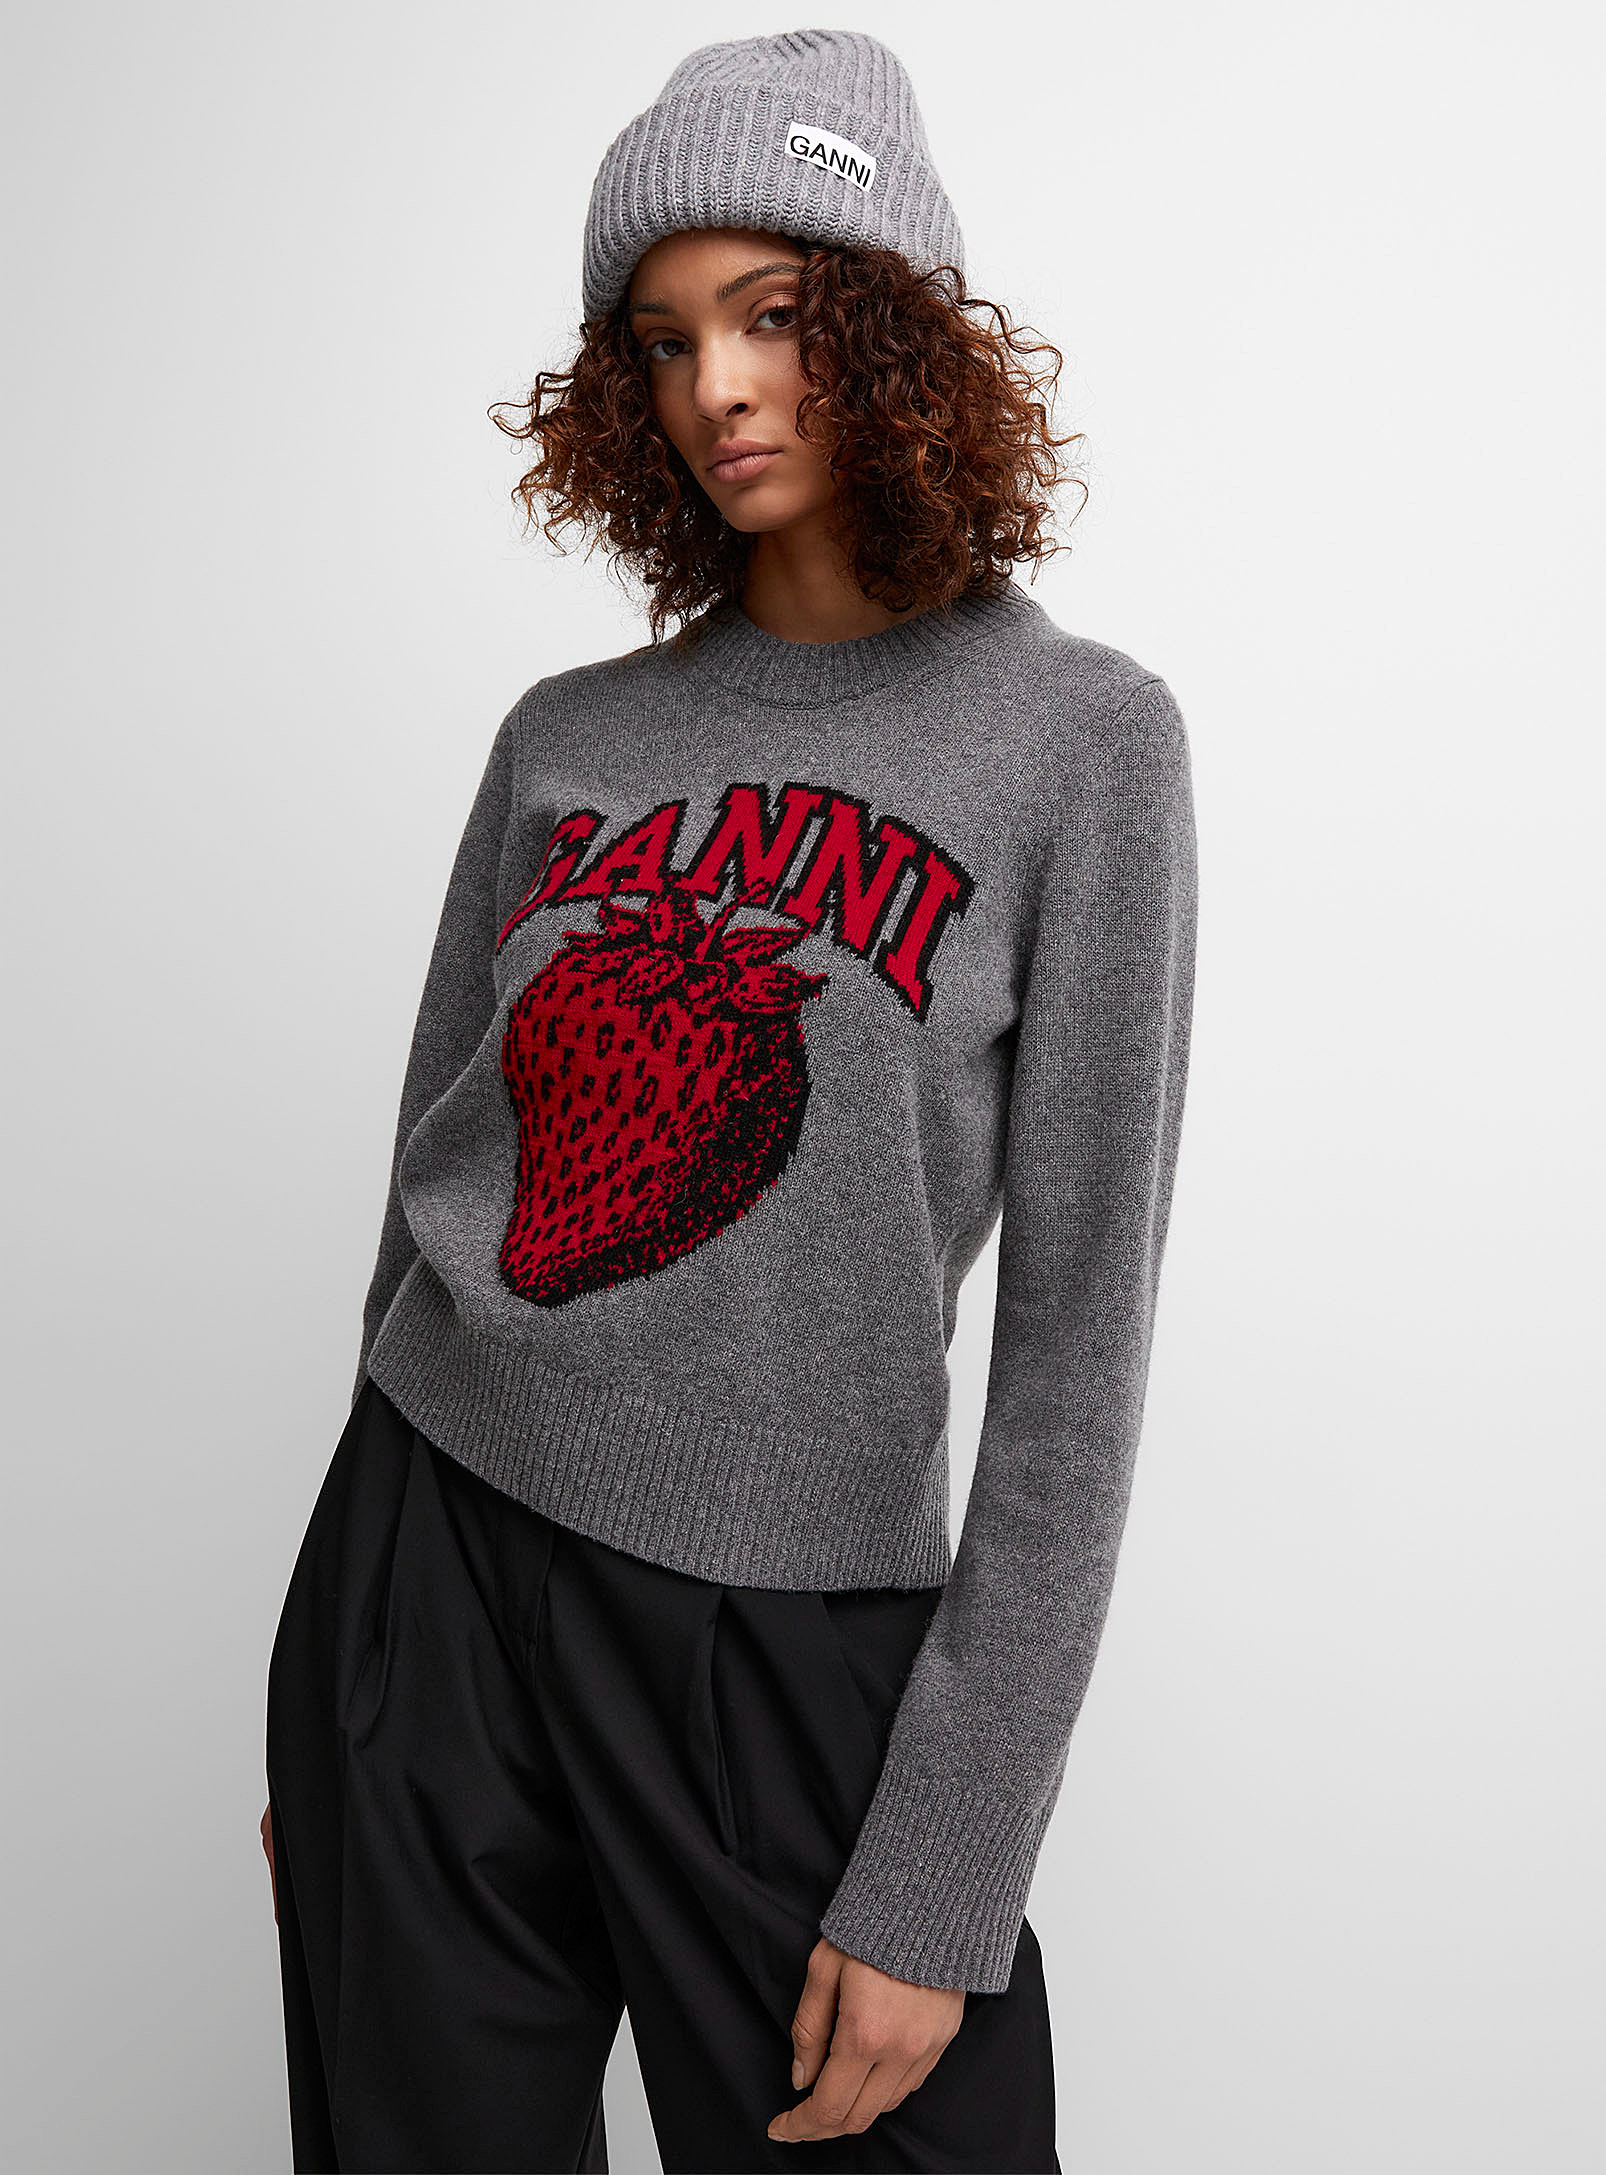 Ganni - Women's Signature strawberry sweater